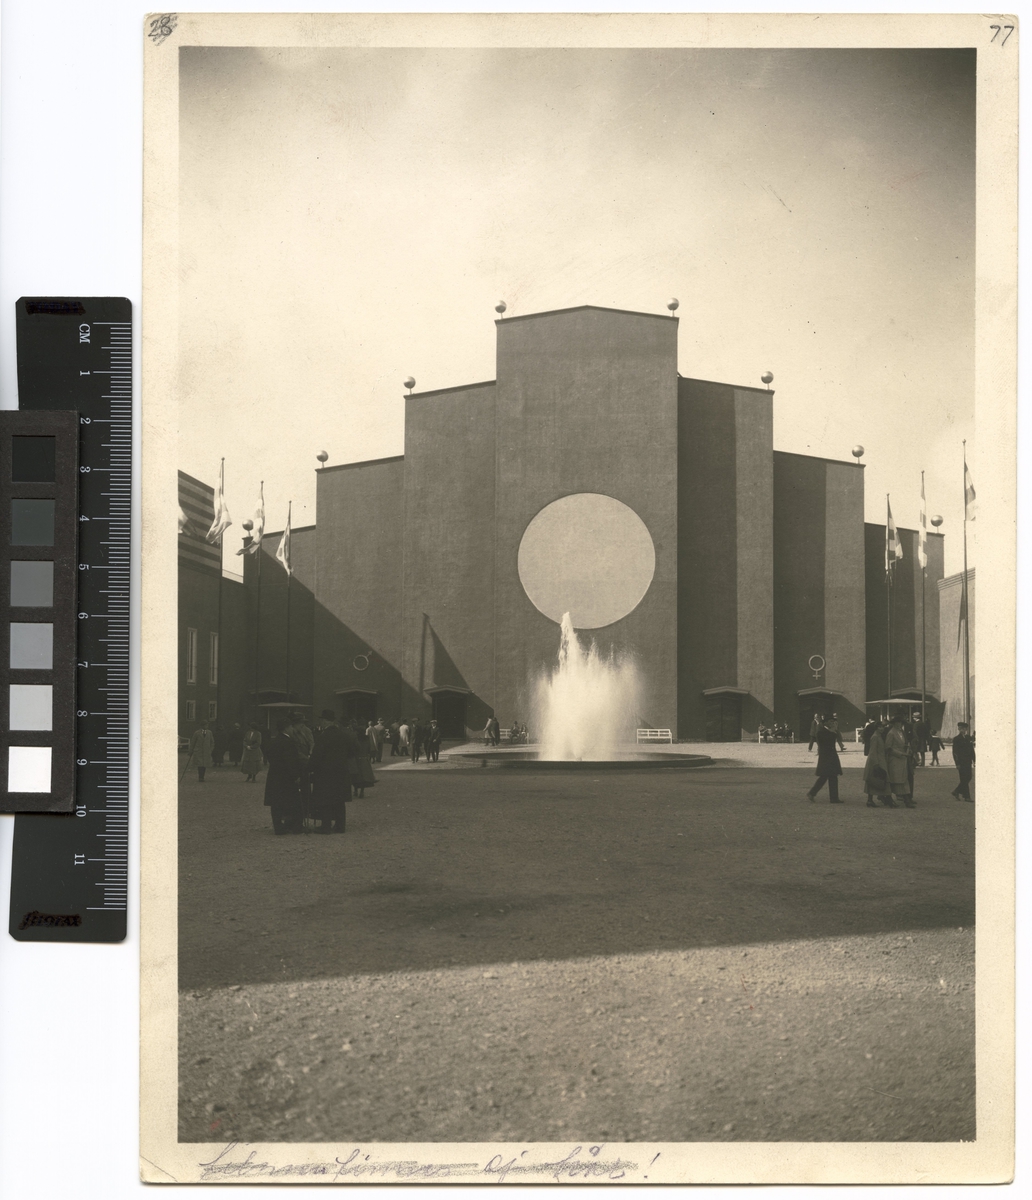 Göteborgs Jubileum (Minnesutställningen), 1923
Exporthallen, exteriör